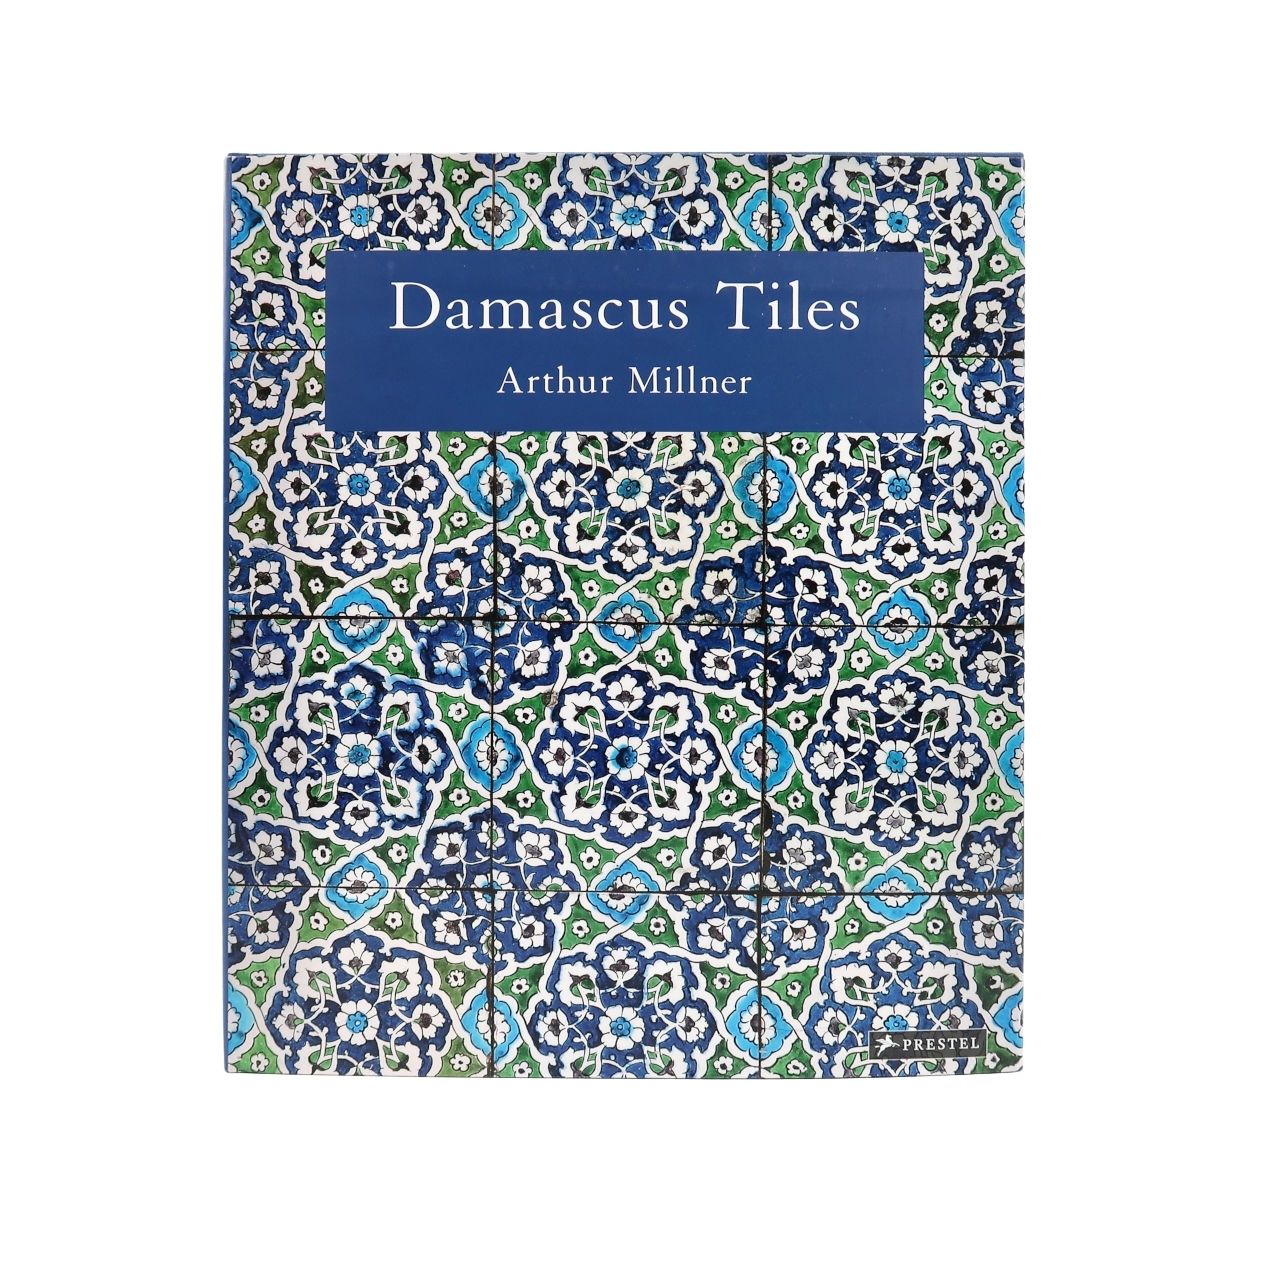 Prestel Damascus Tiles Book by Arthur Millner - Signed Copies